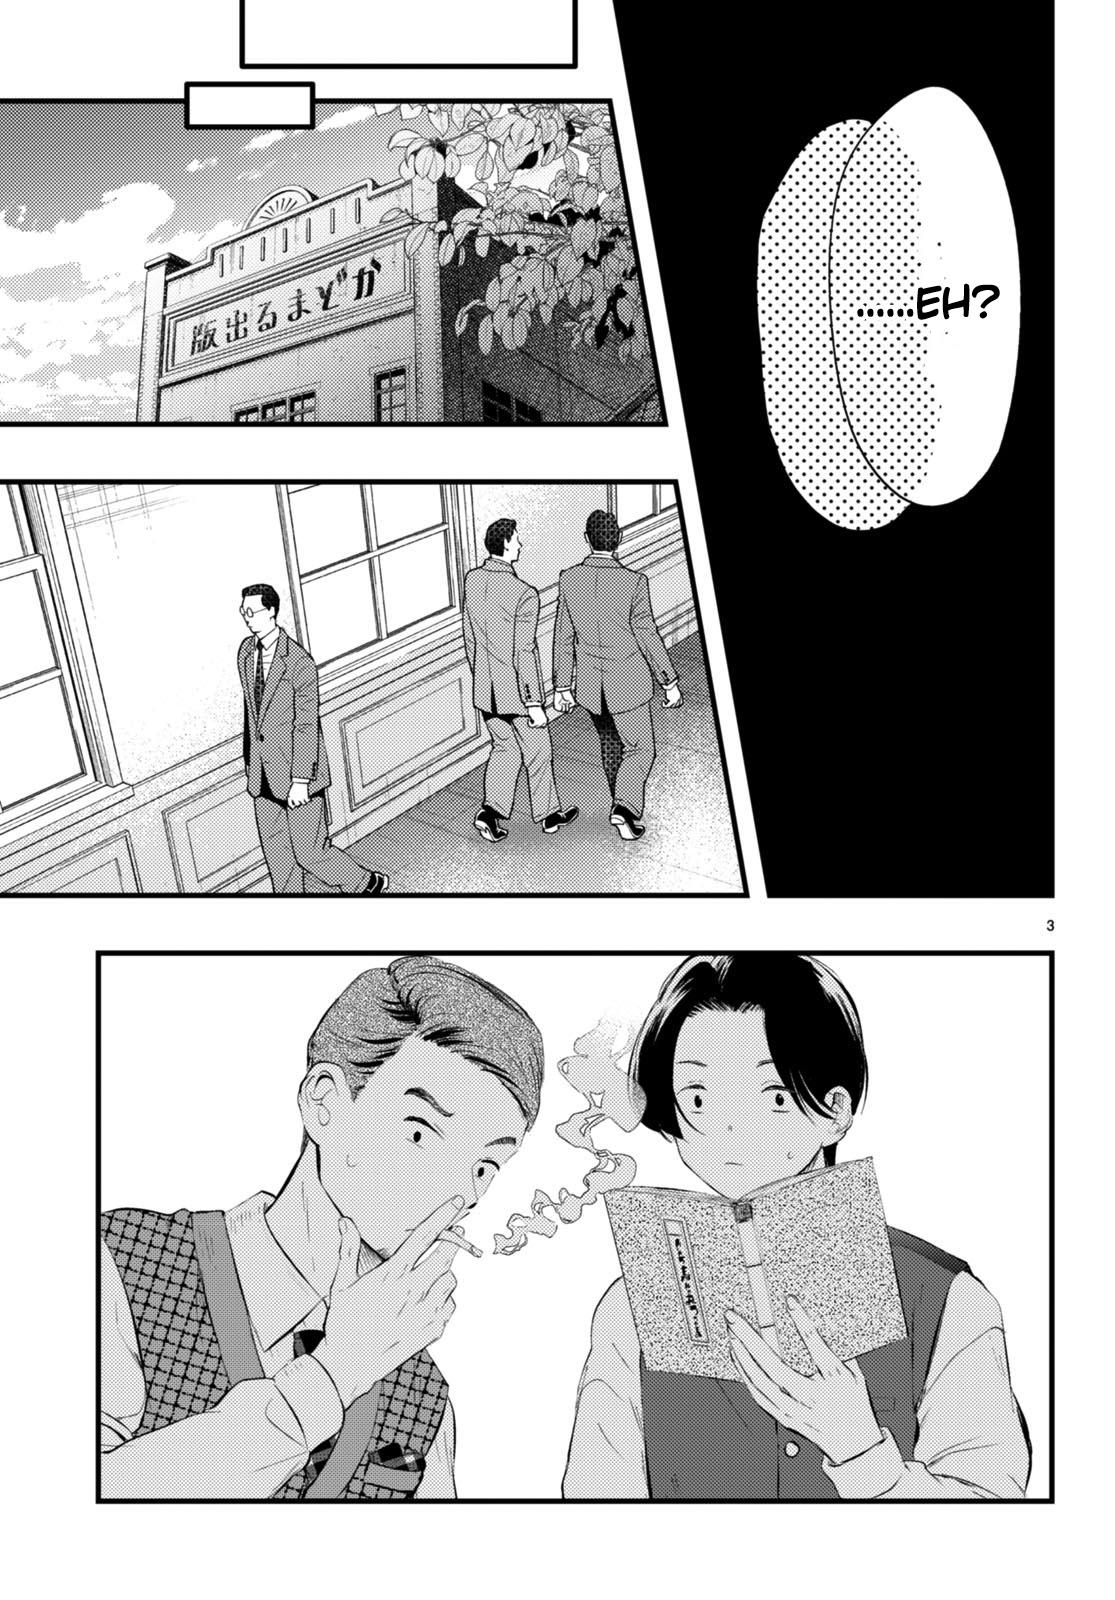 Tsuma No Kigen De Tenkou Ga Kawaru Hanashi Vol.1 Chapter 5: A Decision To Take The Next Step Together - Picture 3